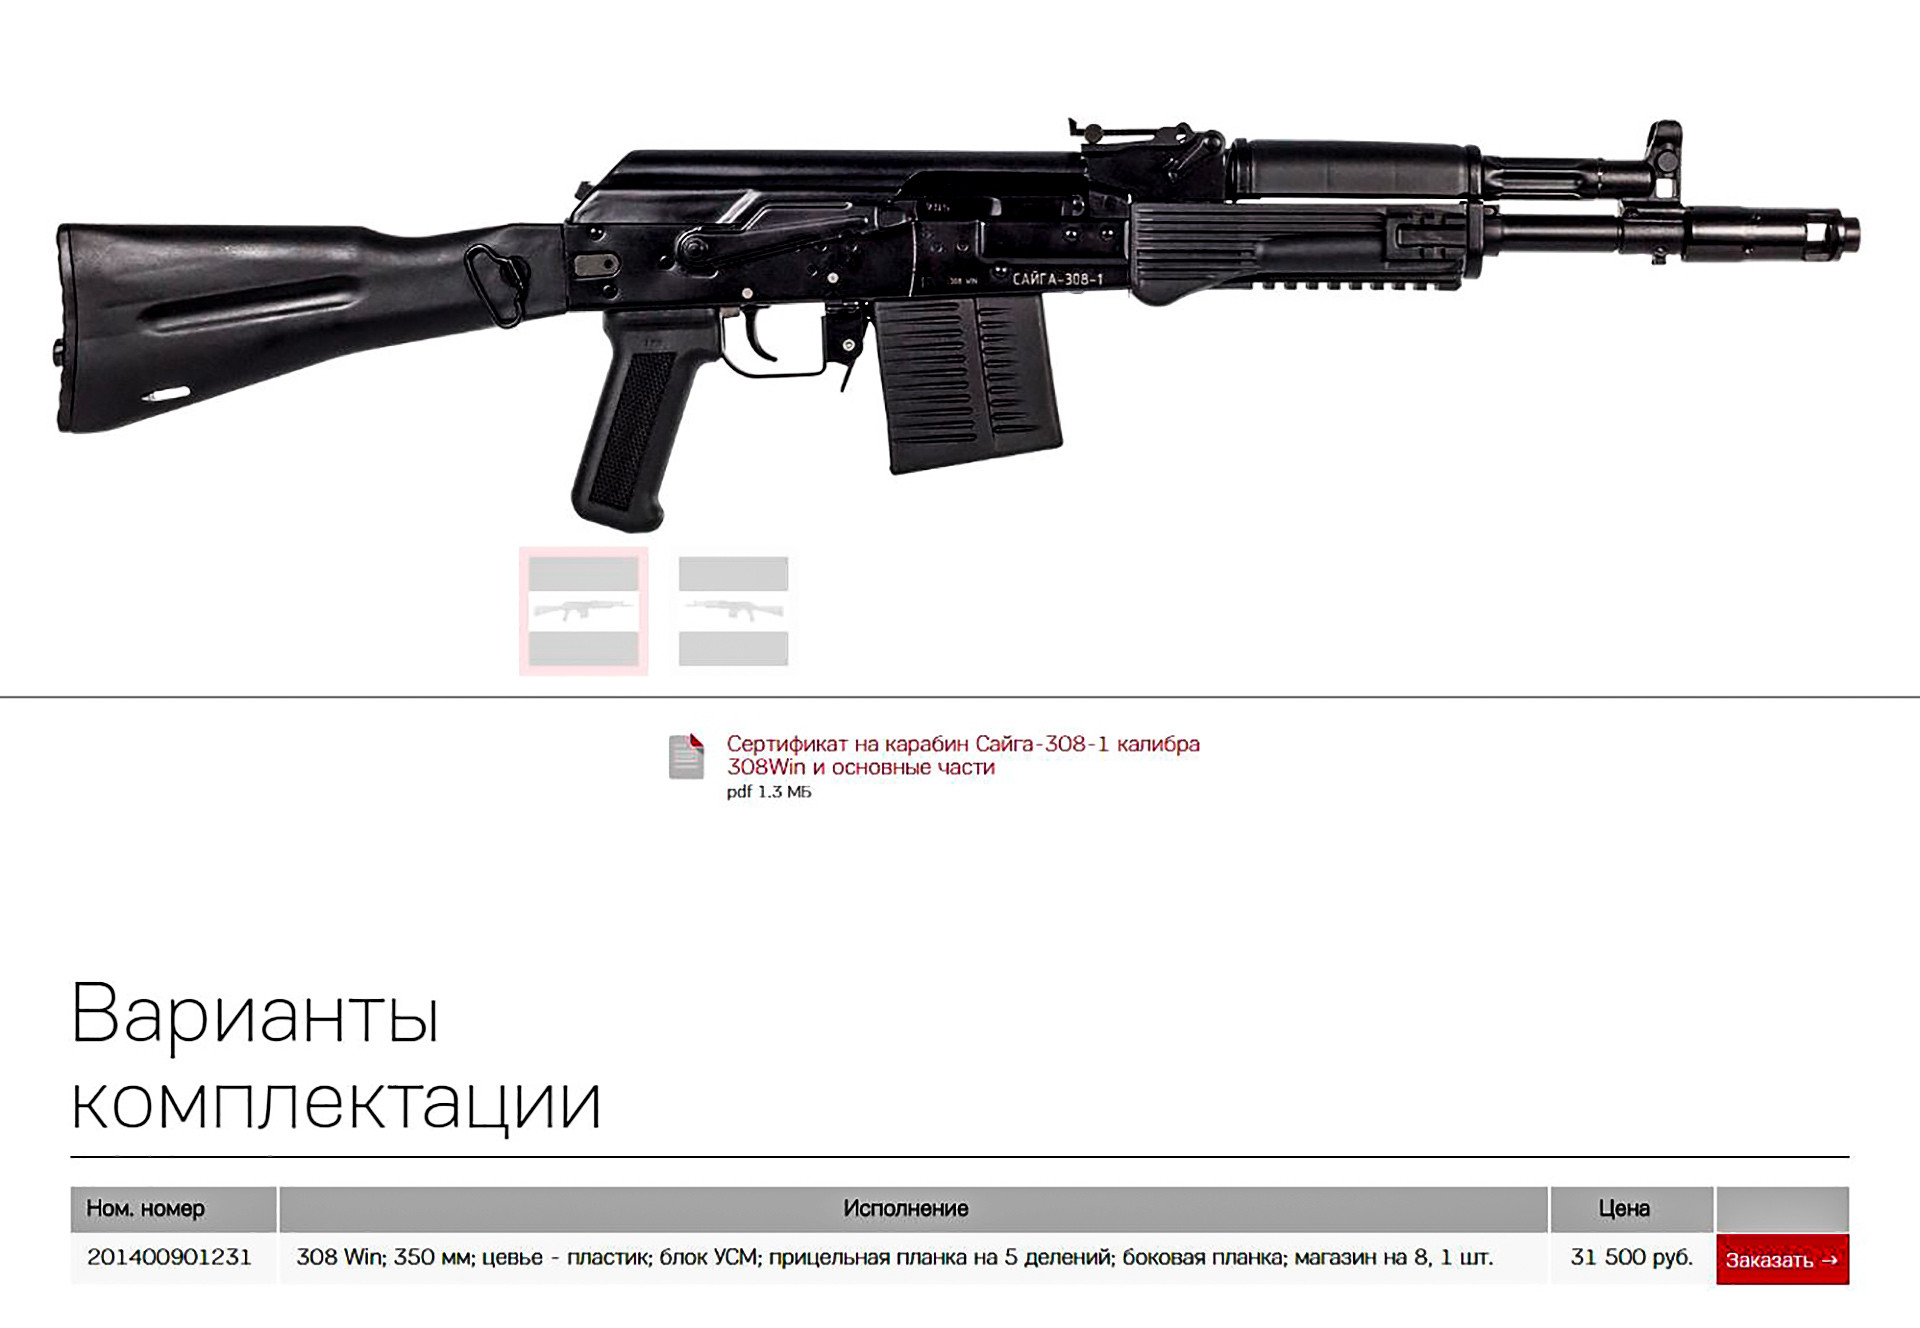 Un modello di Kalashnikov